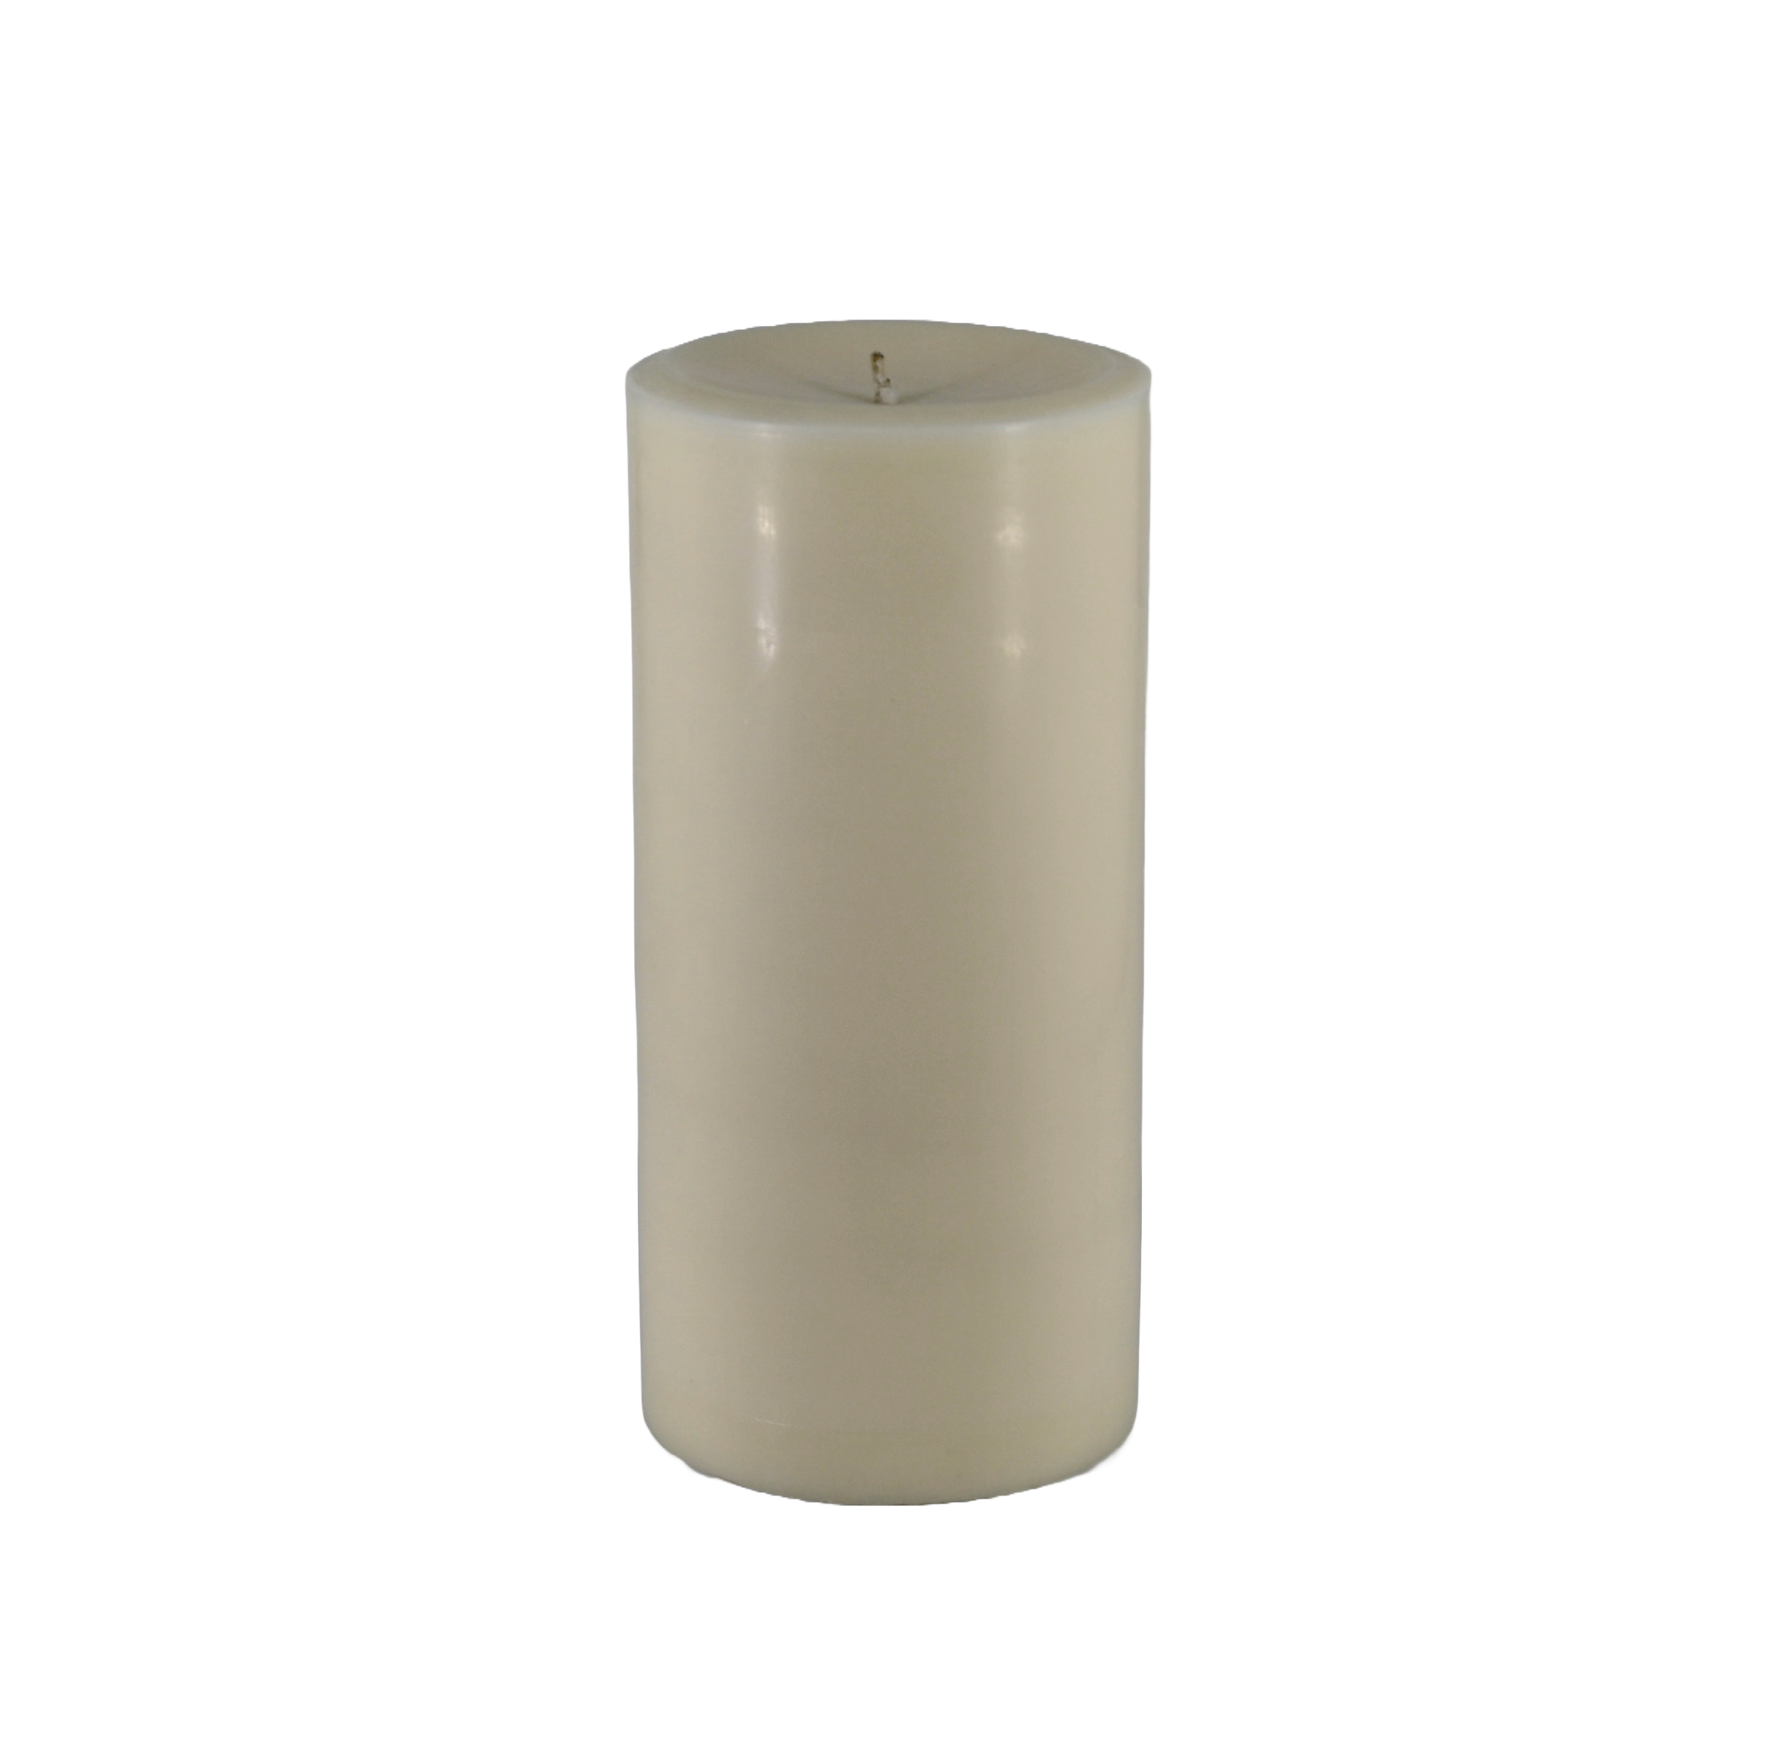 3x6.5 inch soy pillar candle